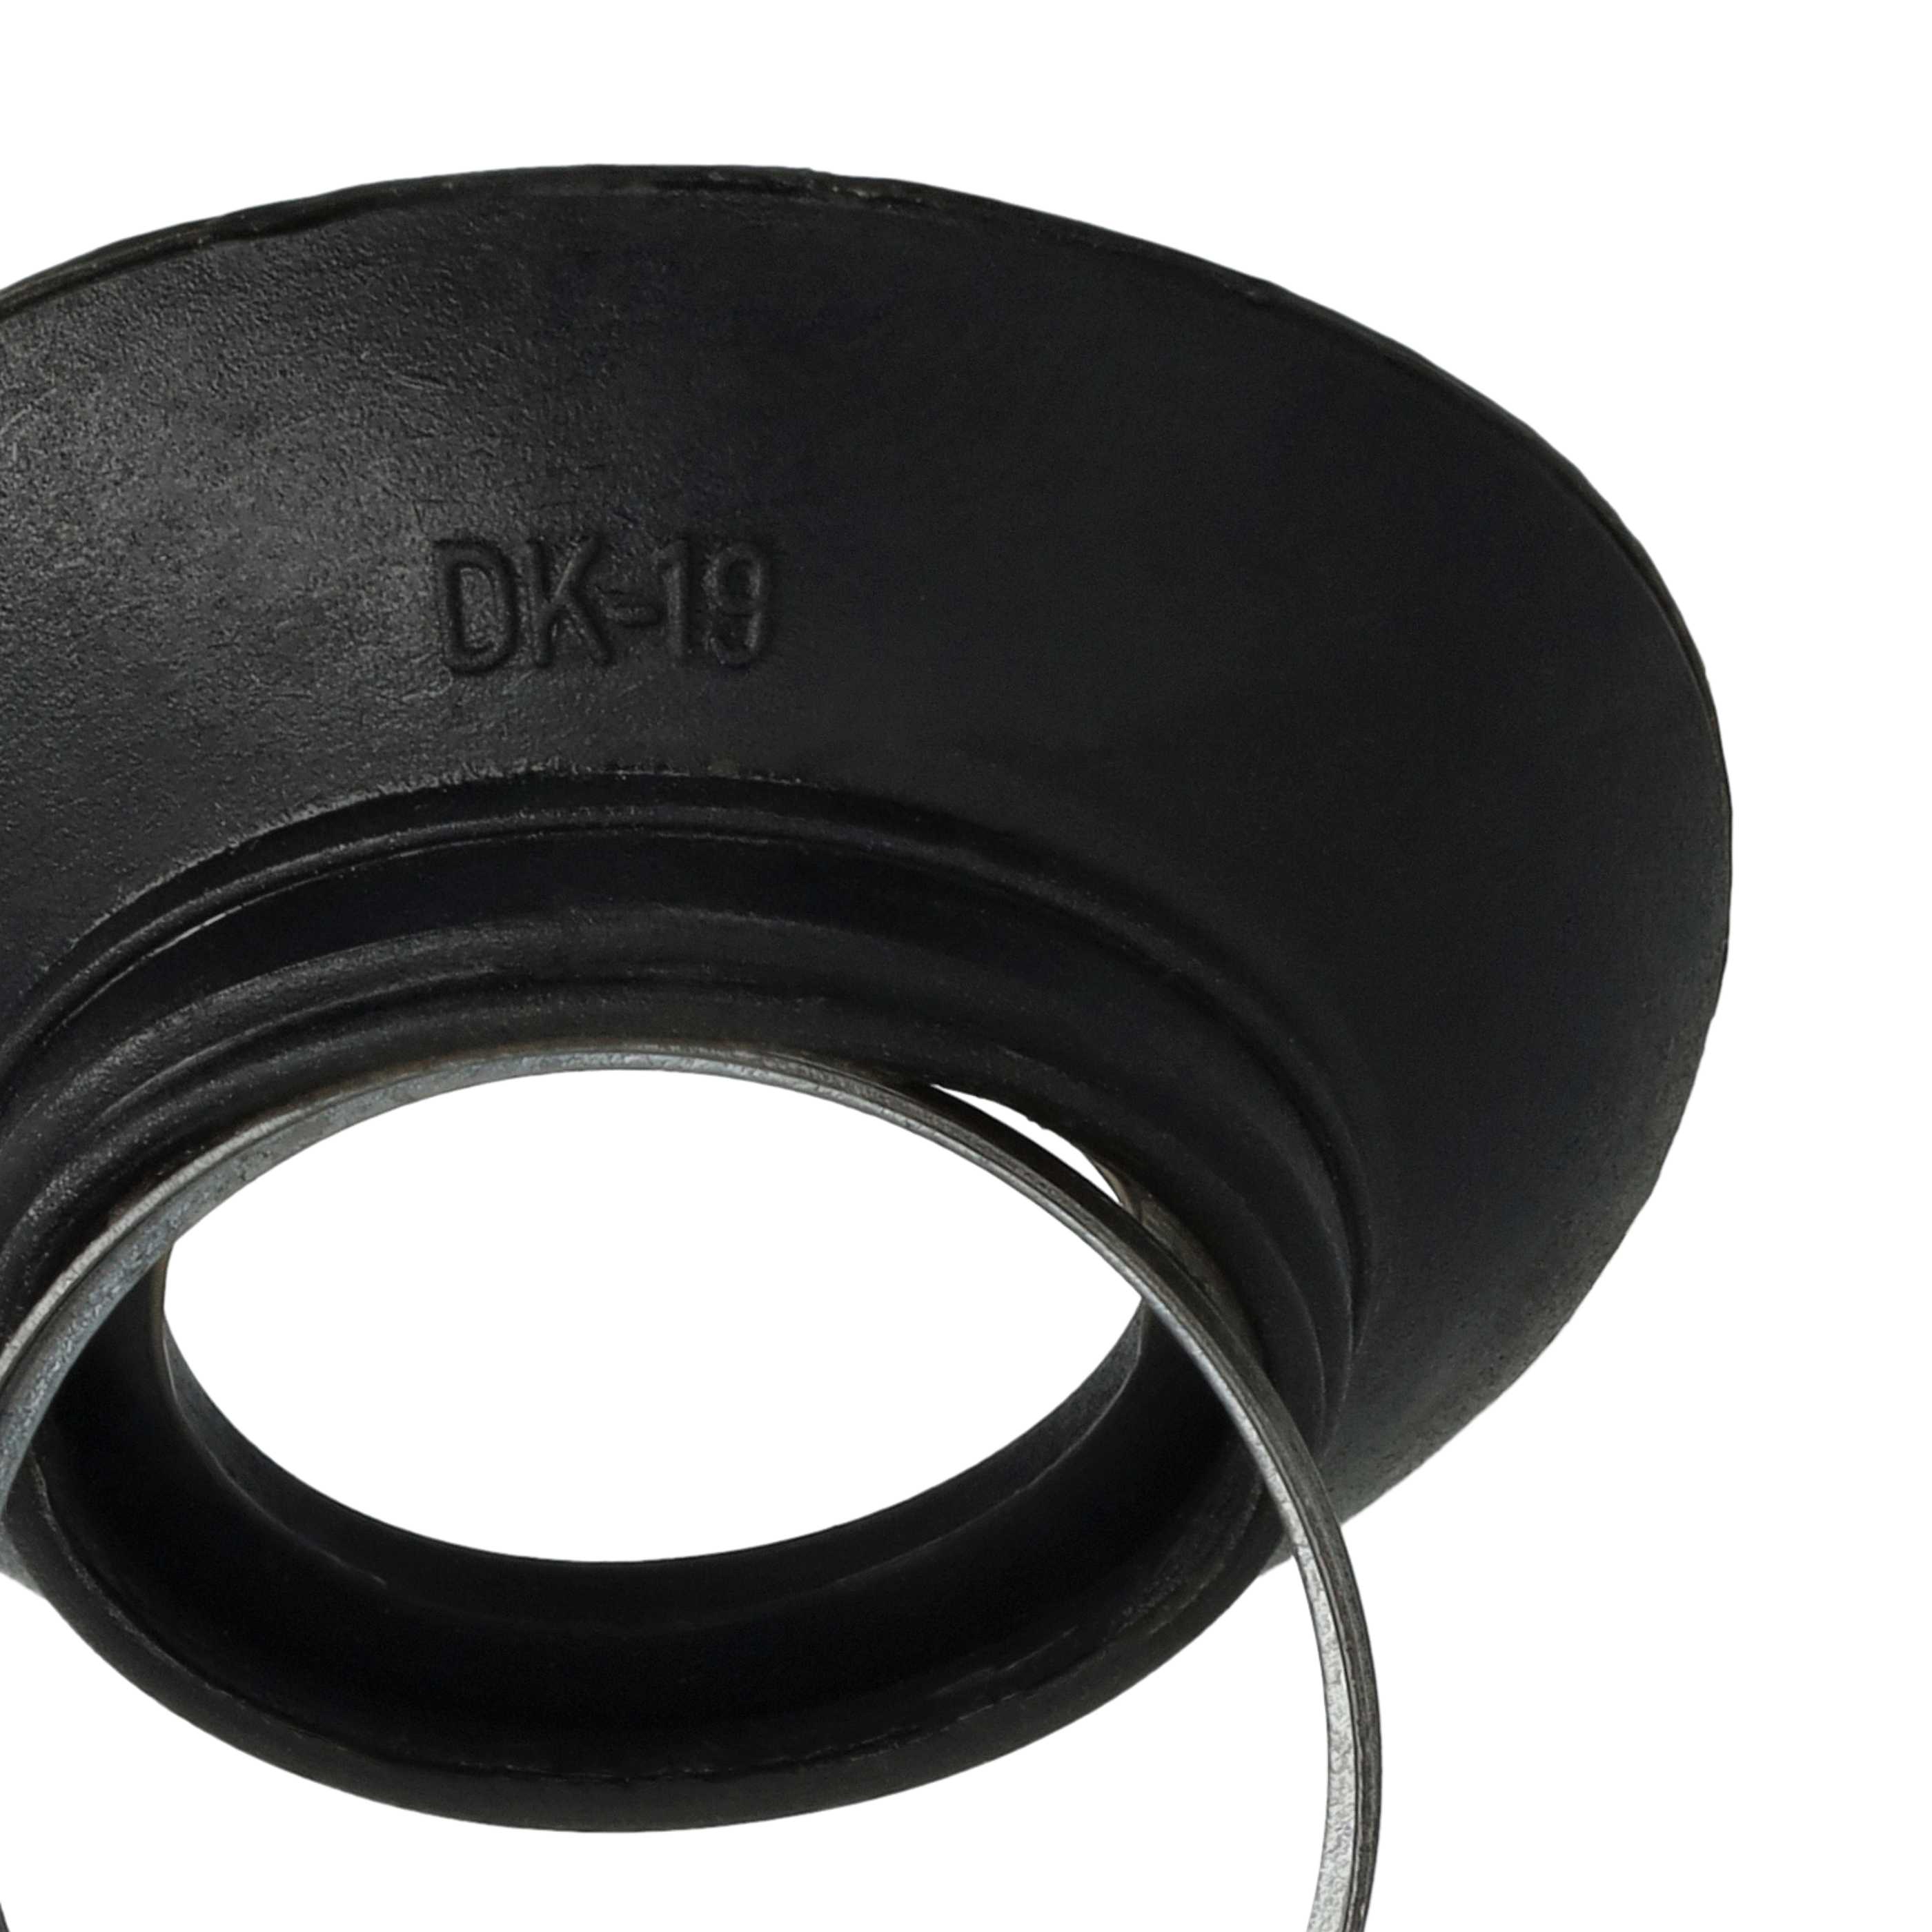 Eye Cup replaces Nikon DK-19 for Nikon D810a etc., Plastic 